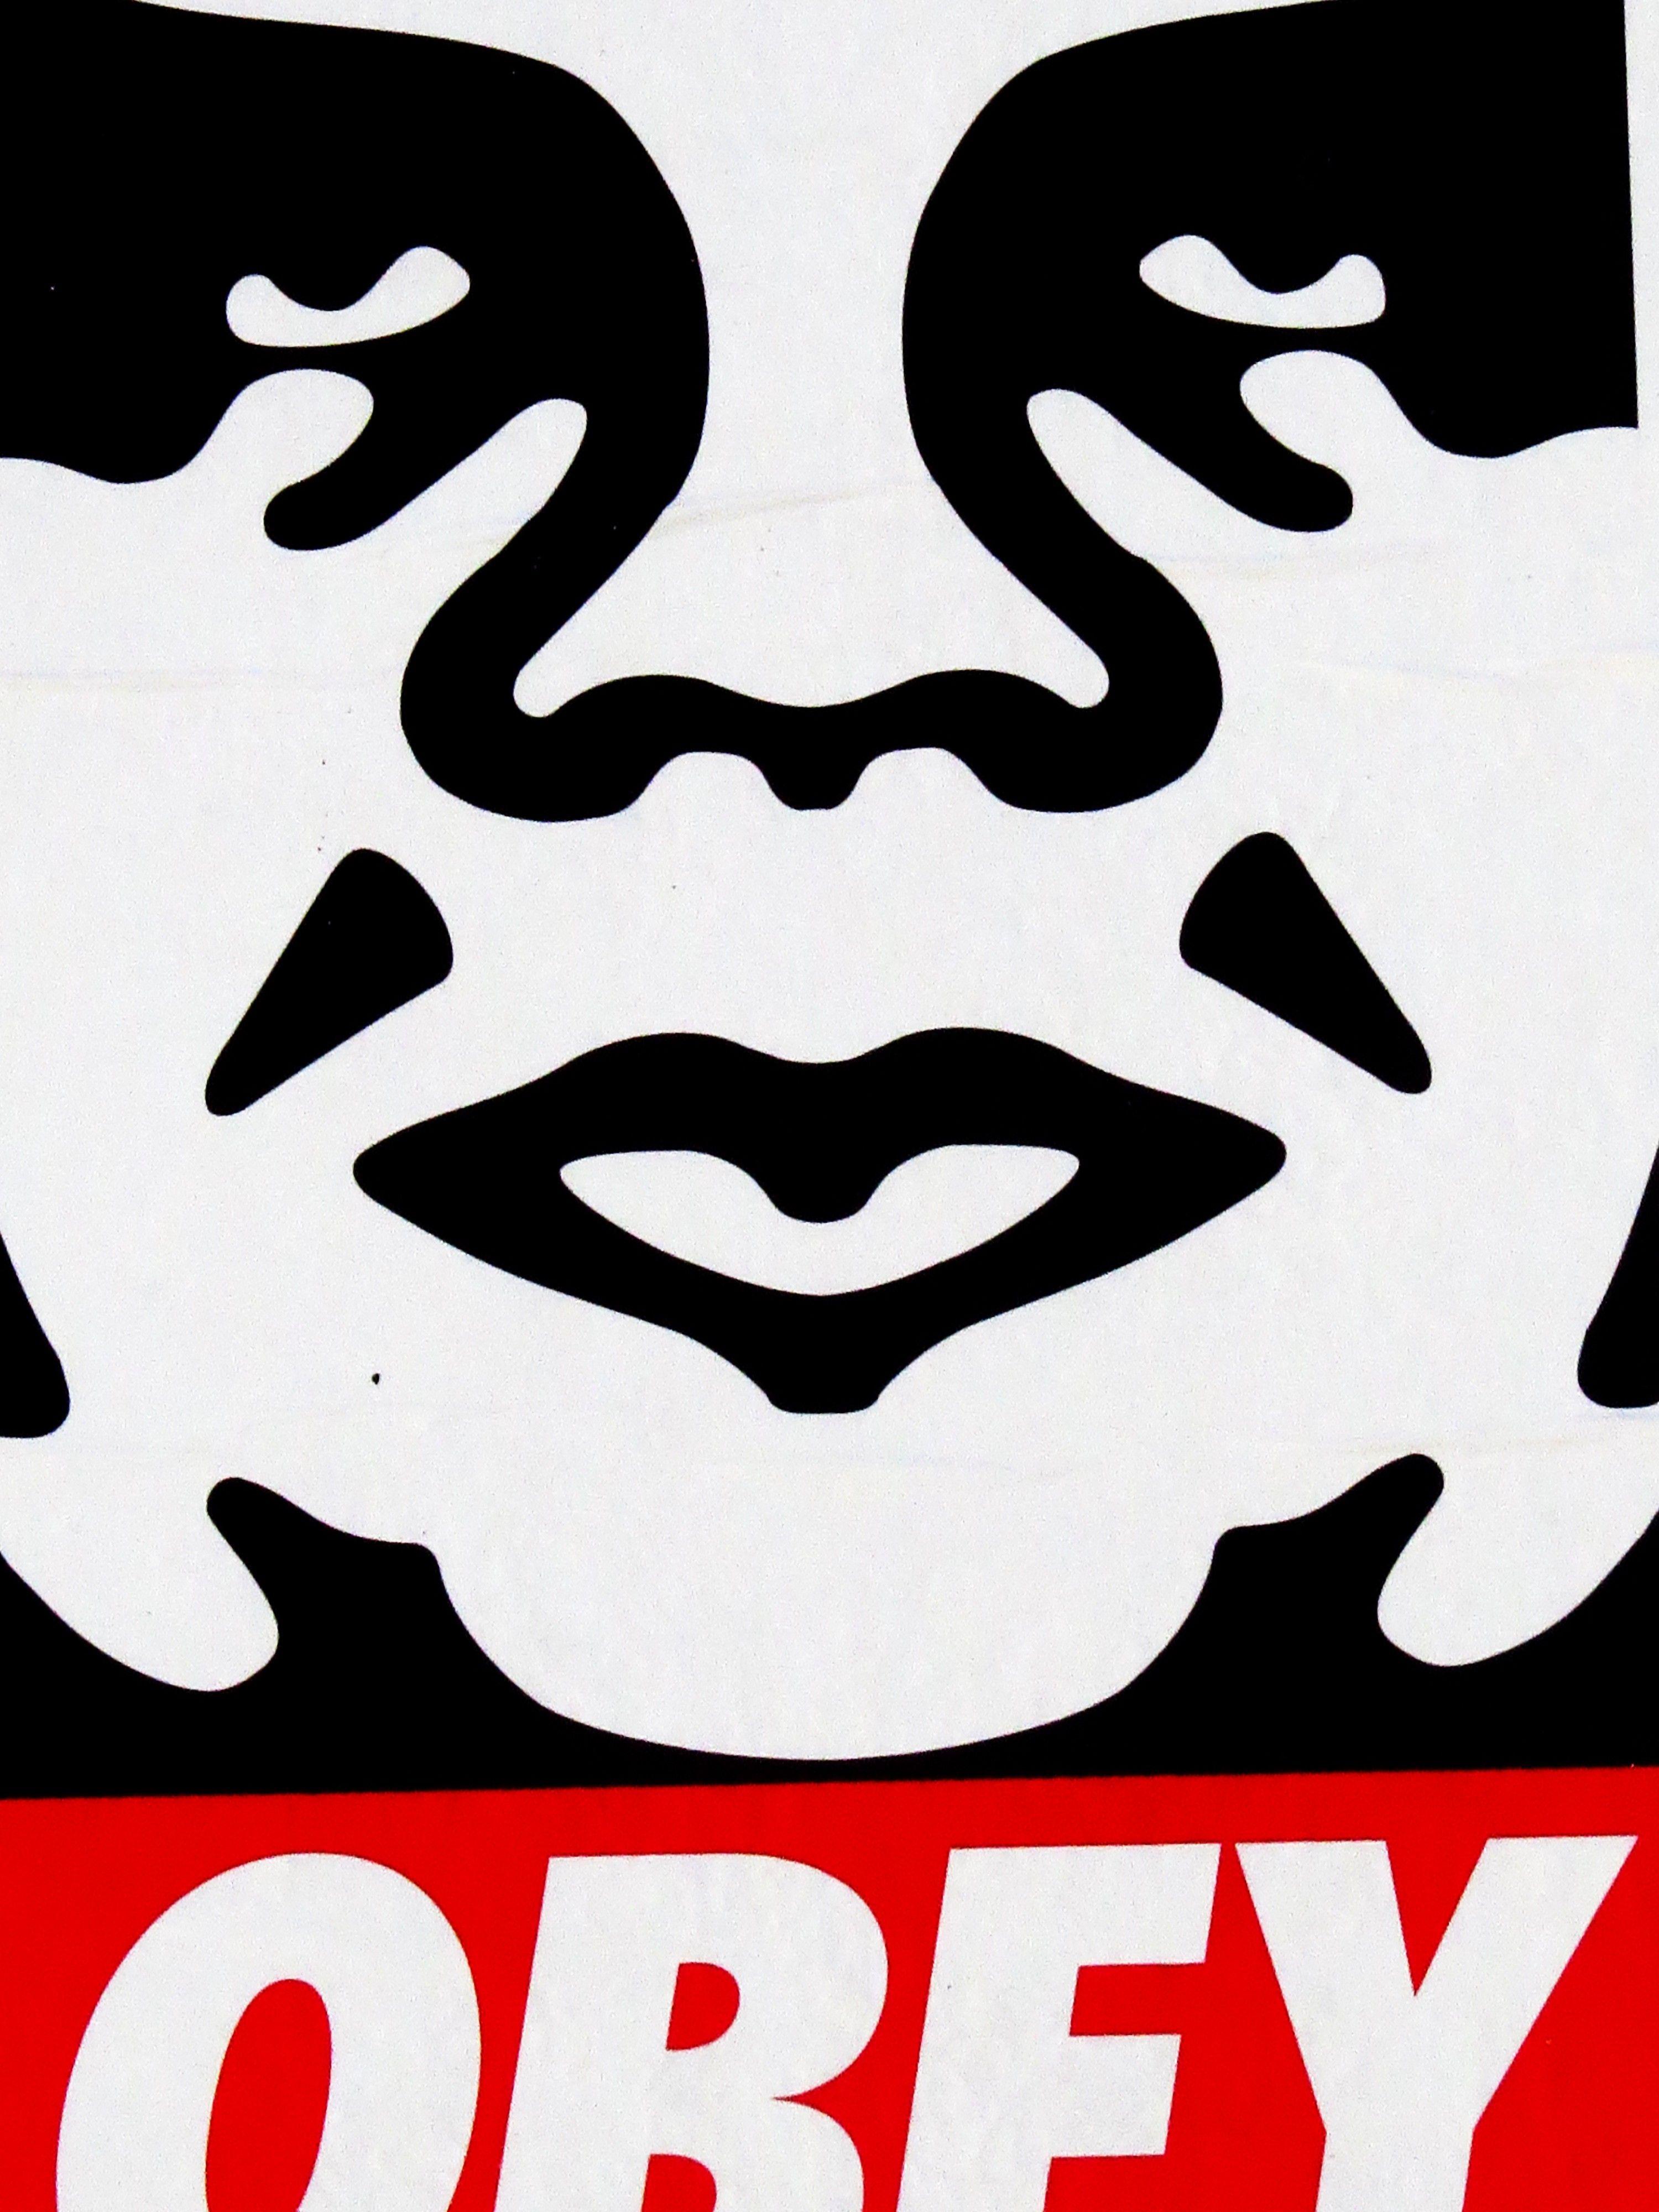 Obey Giant Logo - MIAMI STREET ART: OBEYGIANT by SHEPARD FAIREY IN WYNWOOD